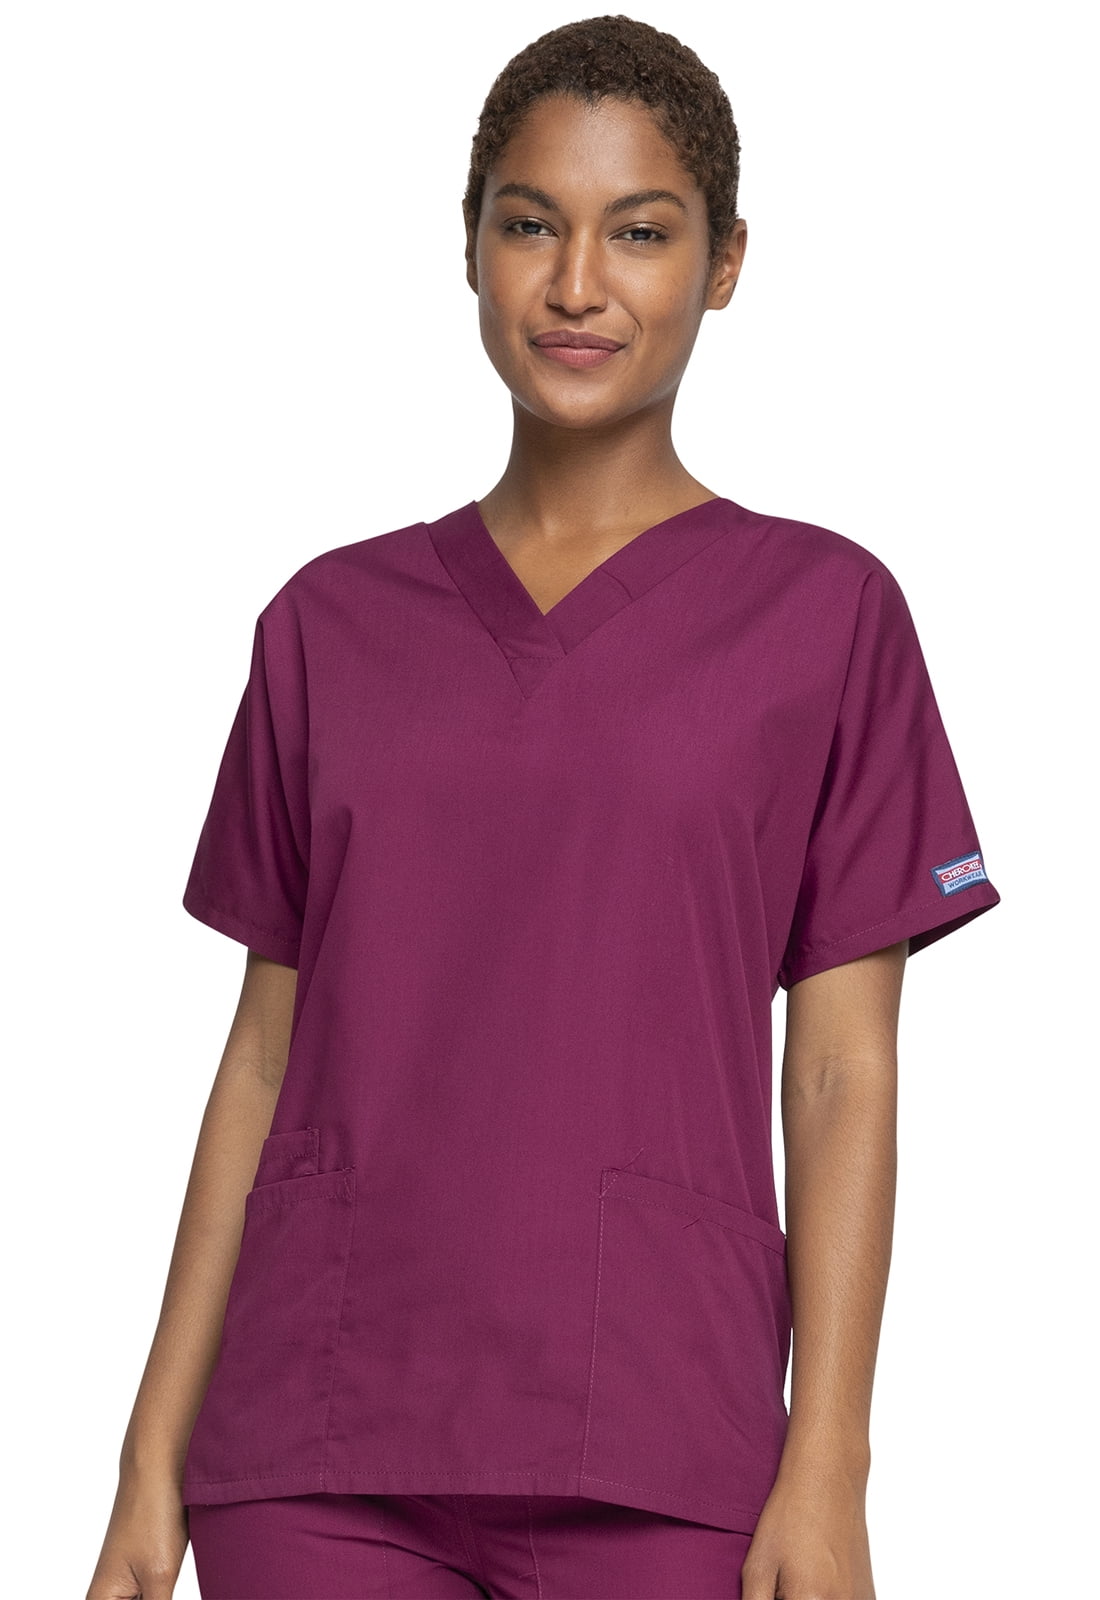 Women's Nursing Scrub Tops Printed Medical Uniforms Closeout Sale Sizes XXS-2XL 